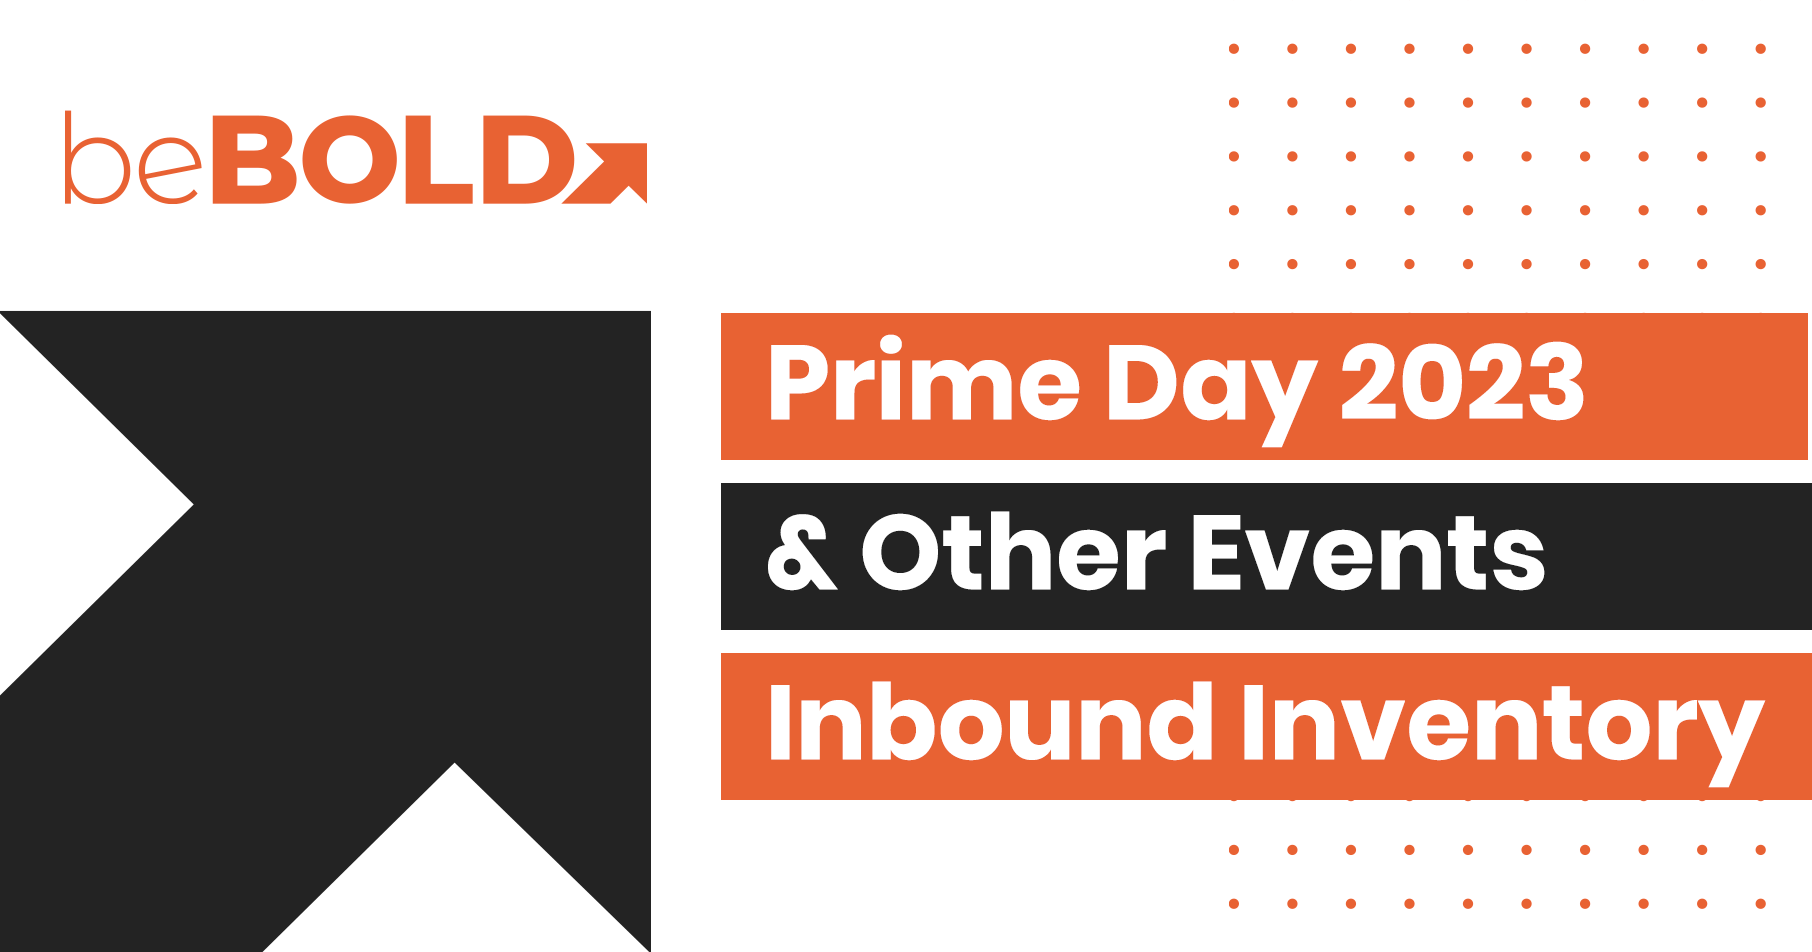 Amazon Prime Day 2023 & Events Inventory Inbound Dates